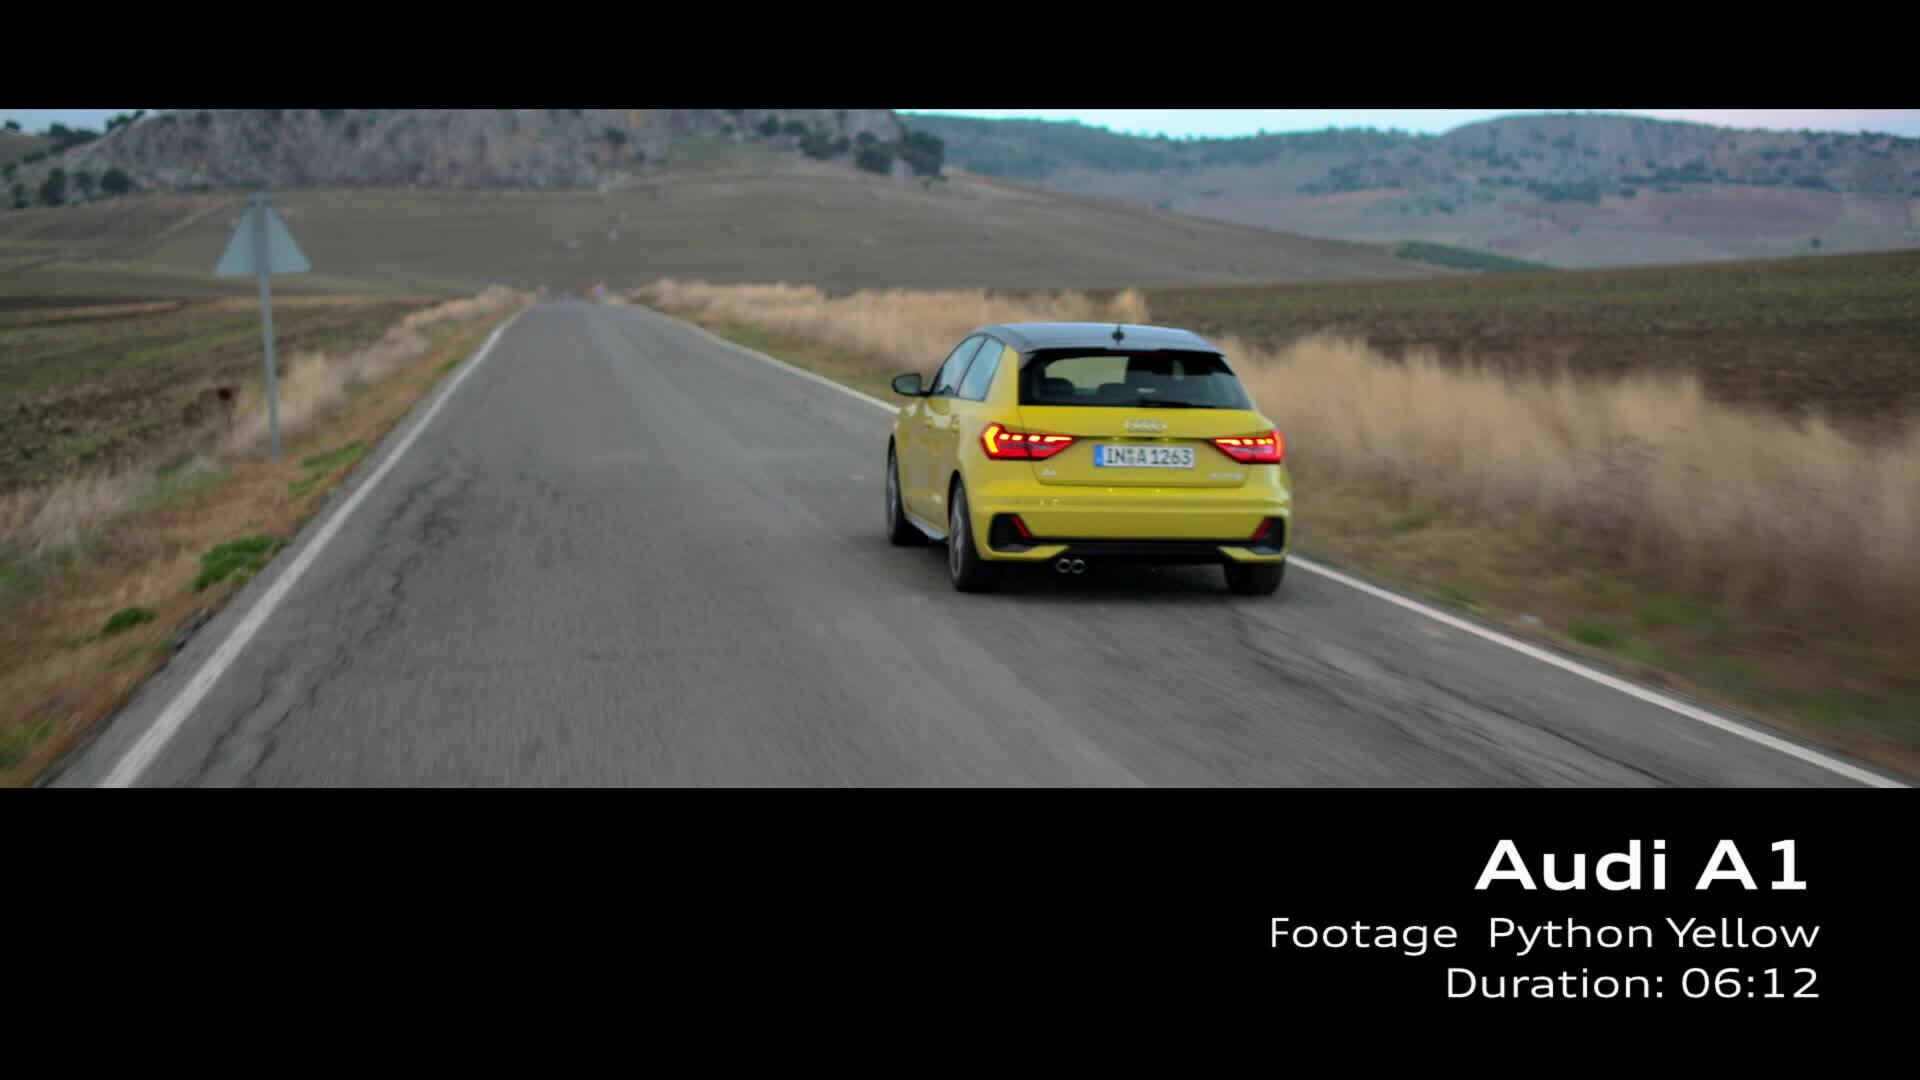 Audi A1 Footage Python yellow (2018)